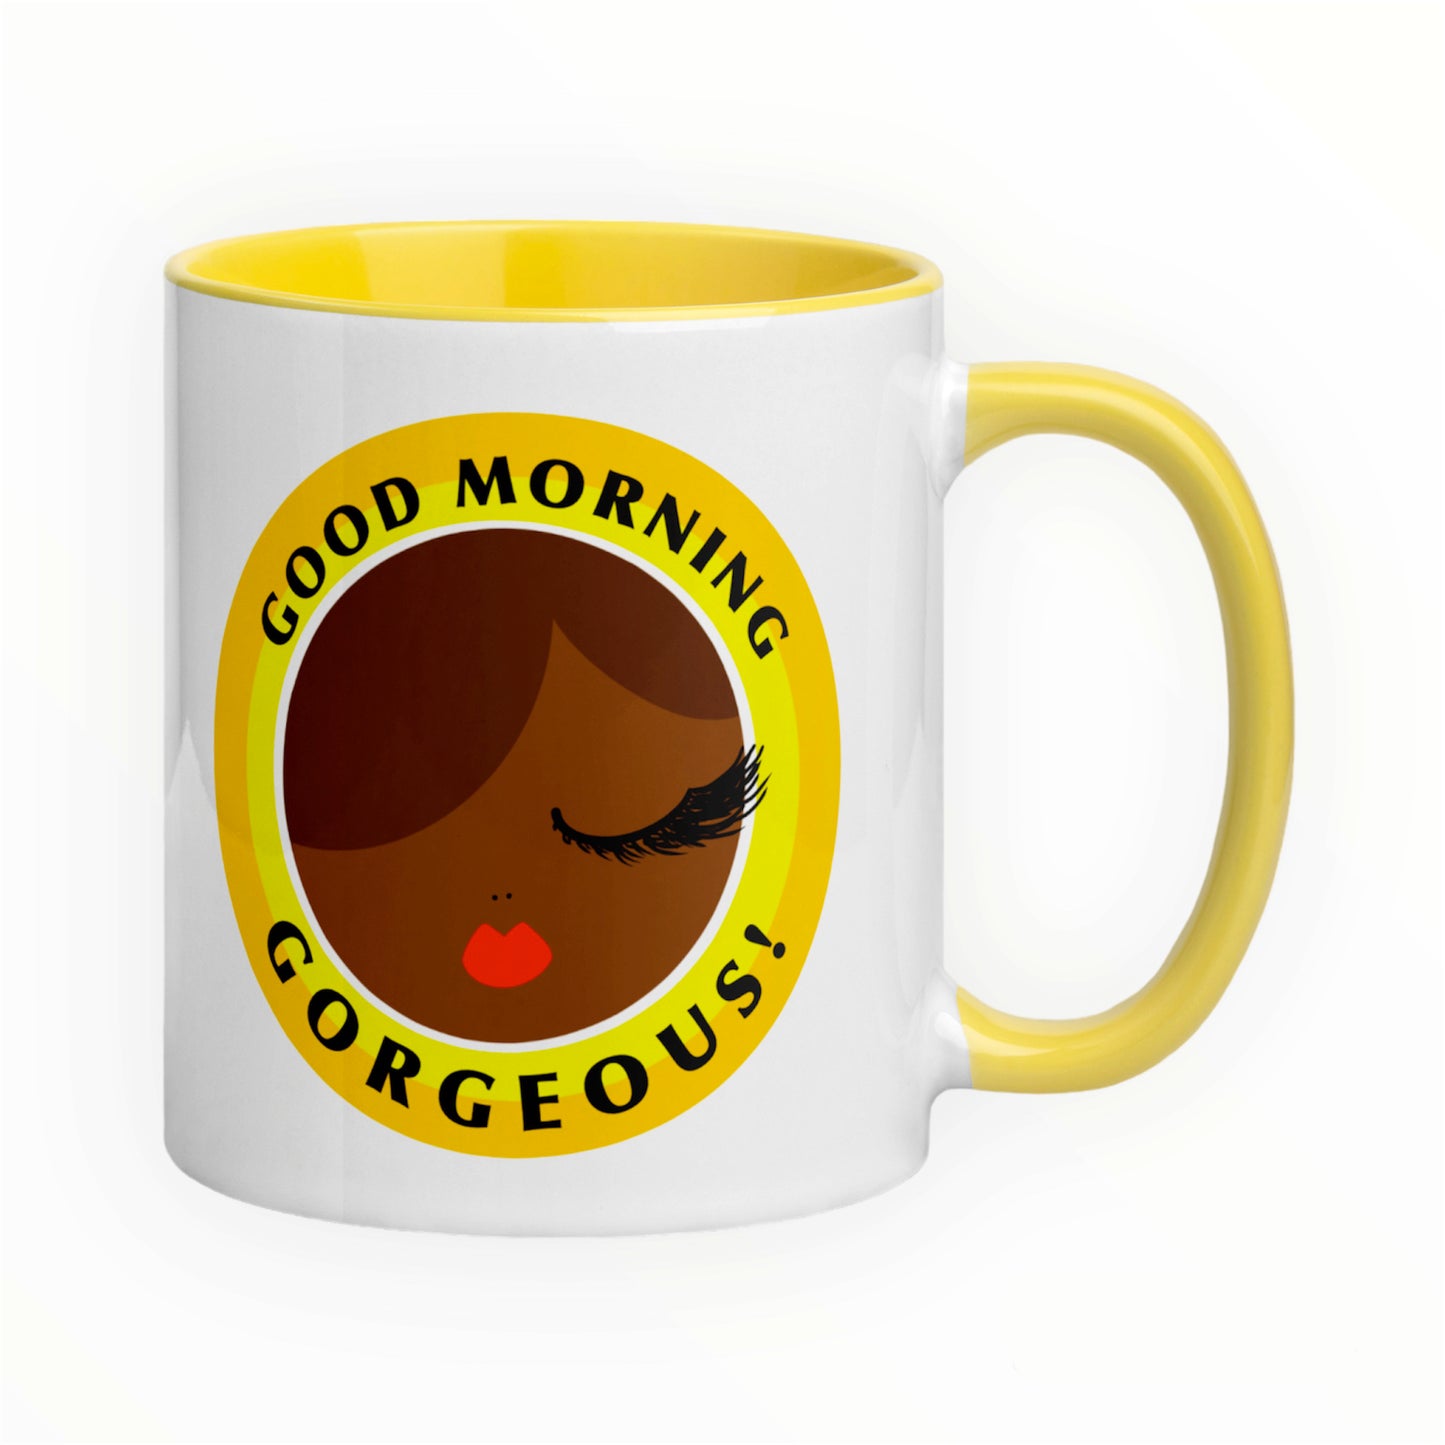 Good Morning Gorgeous! 11 oz Ceramic Mug